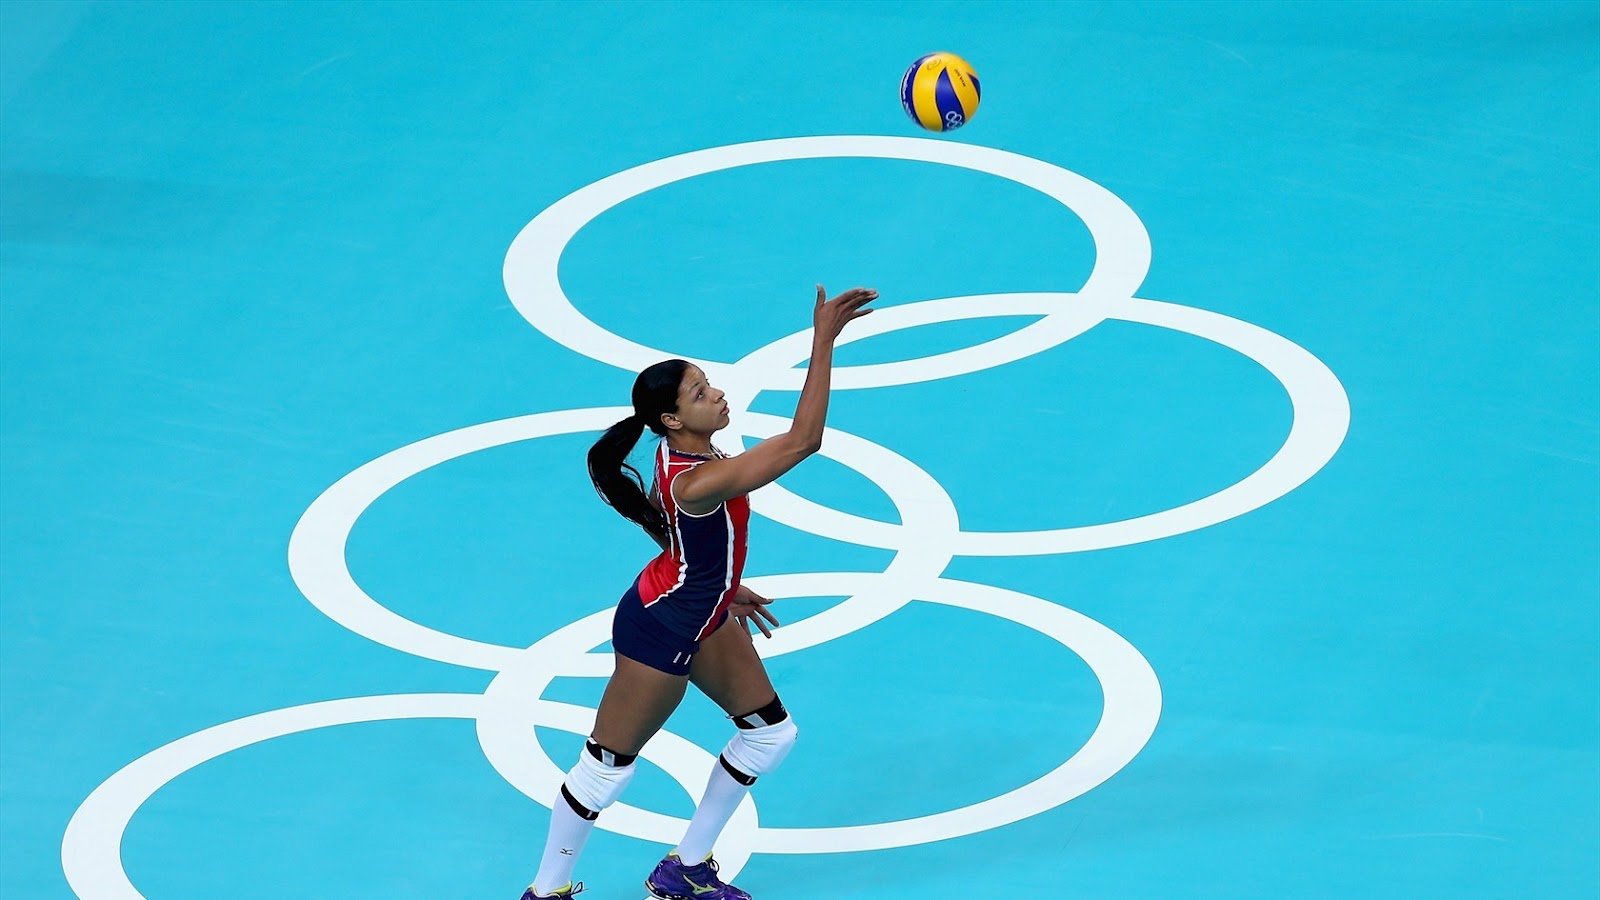 Женский баскетбол включен в программу олимпийских игр. Волейбол Олимпийские игры. Волейбол Олимпийский вид спорта. Волейбол ОИ.